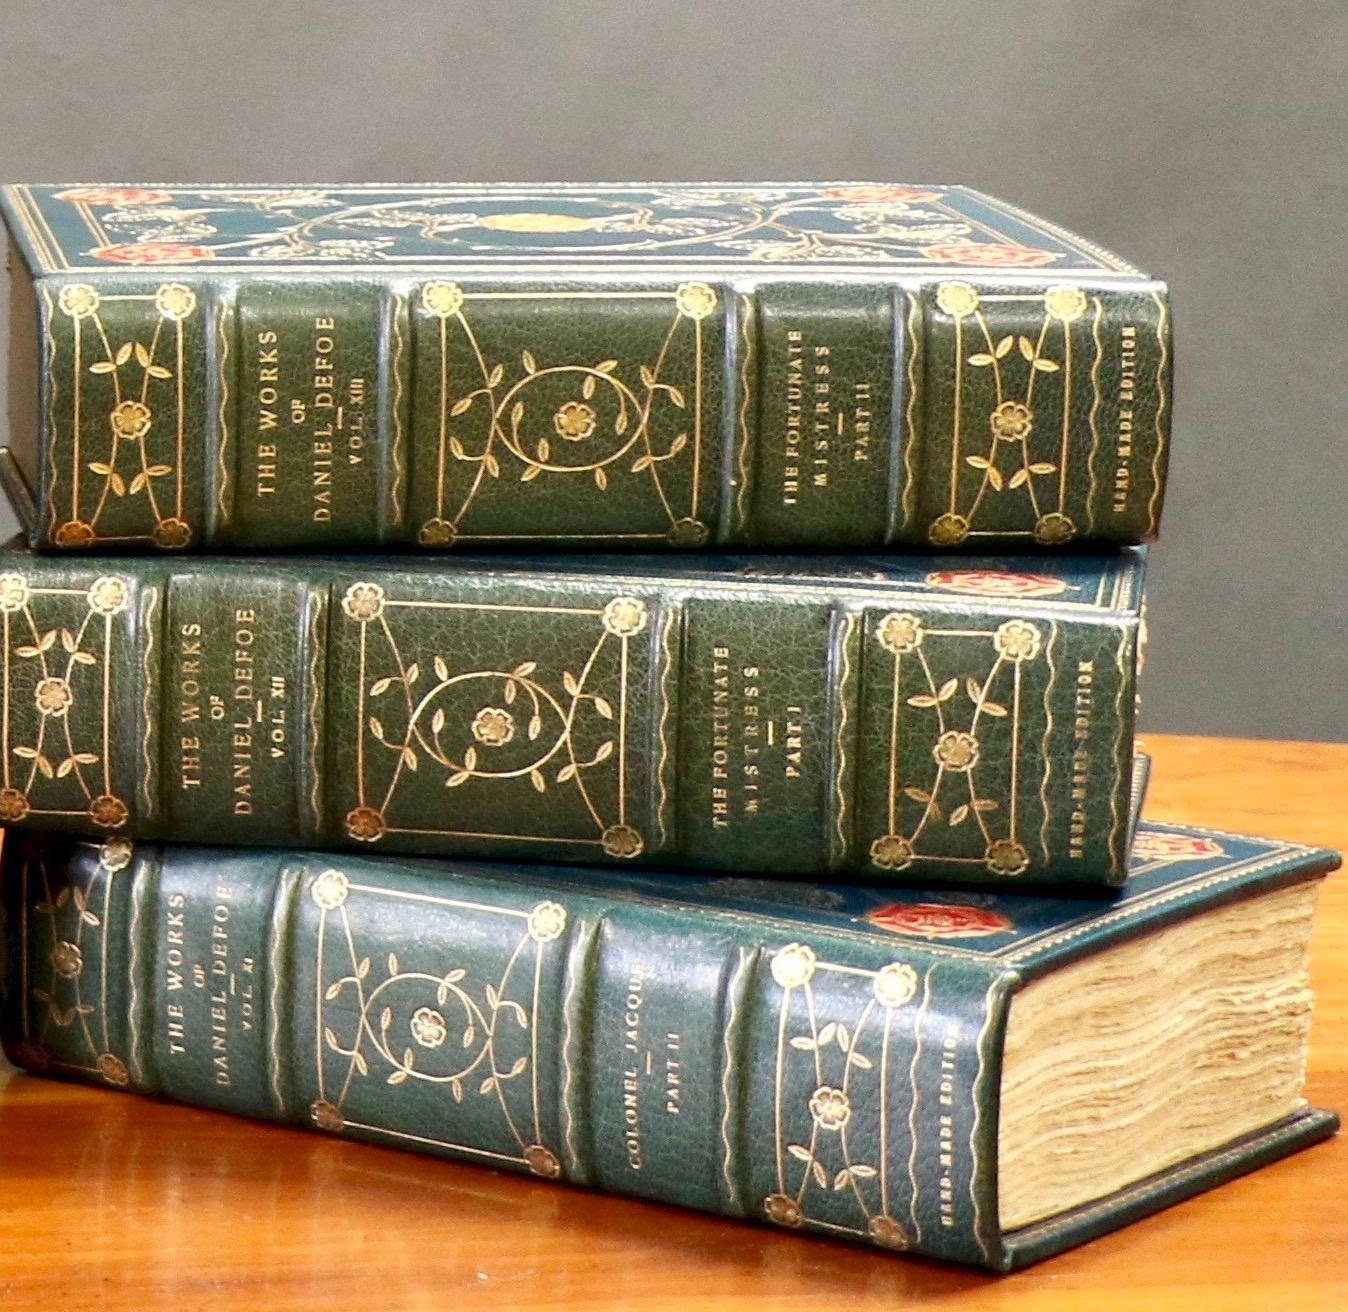 20th Century Books, Daniel Defoe, Complete Works